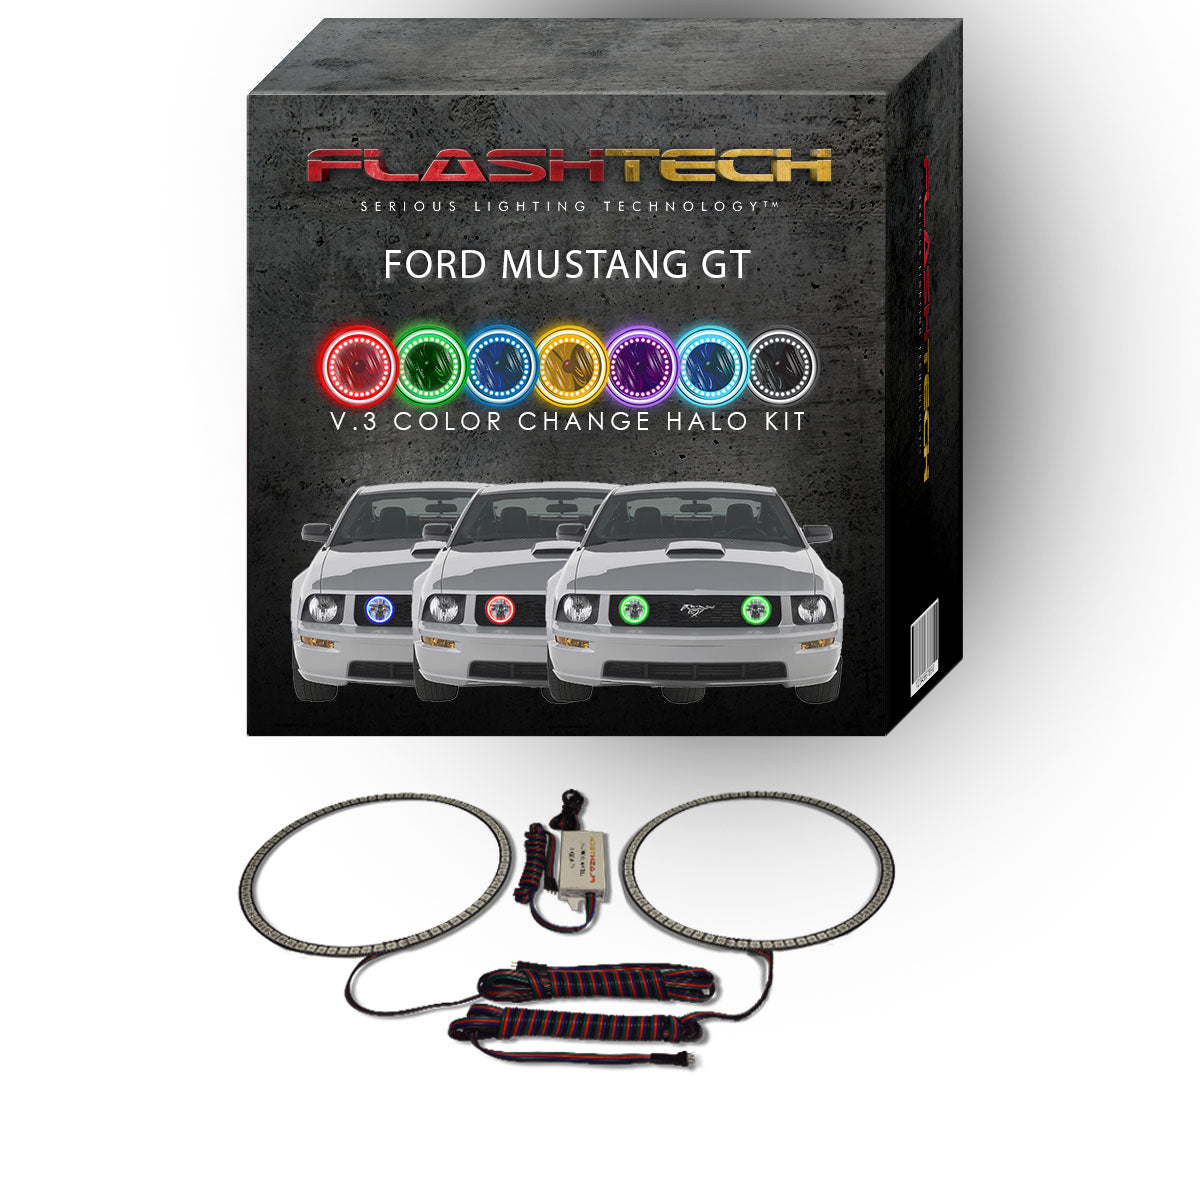 Ford-Mustang-2005, 2006, 2007, 2008, 2009-LED-Halo-Fog Lights-RGB-No Remote-FO-MUGT0509-V3F